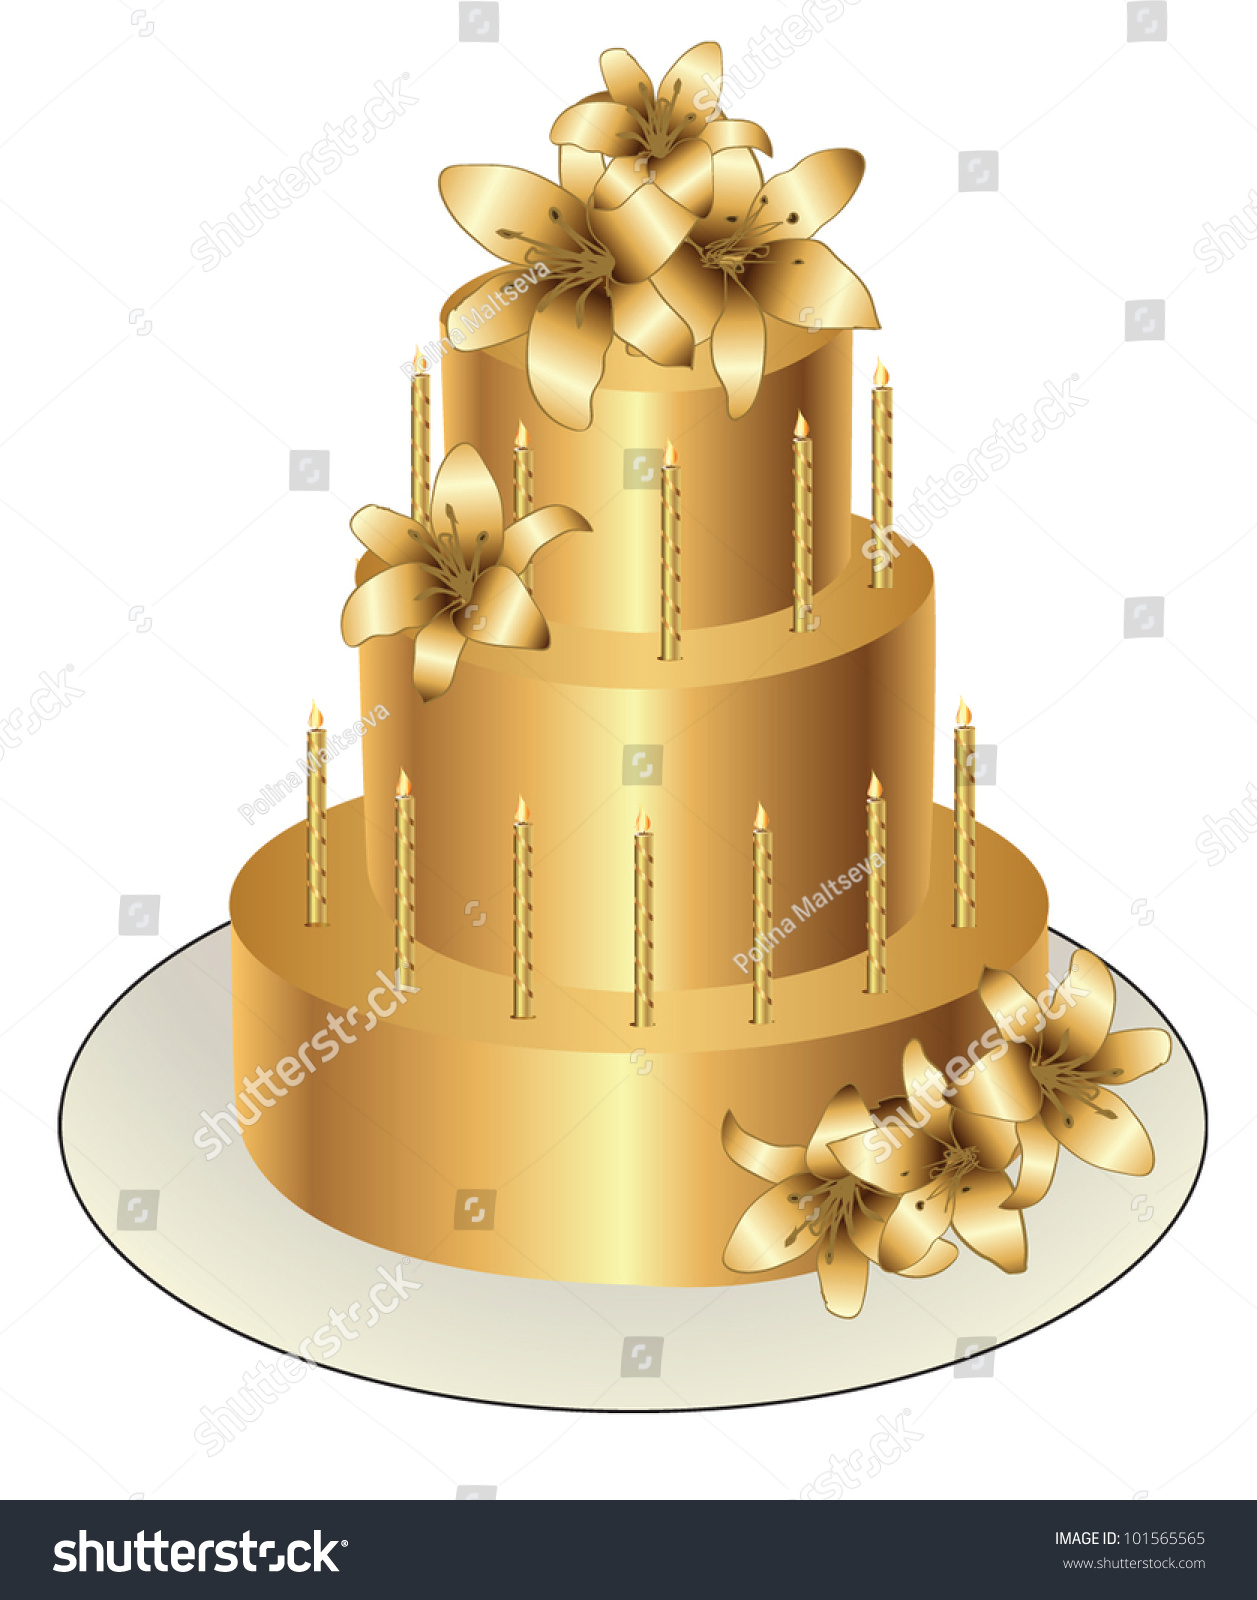 stock vector gold birthday cake vector design 101565565